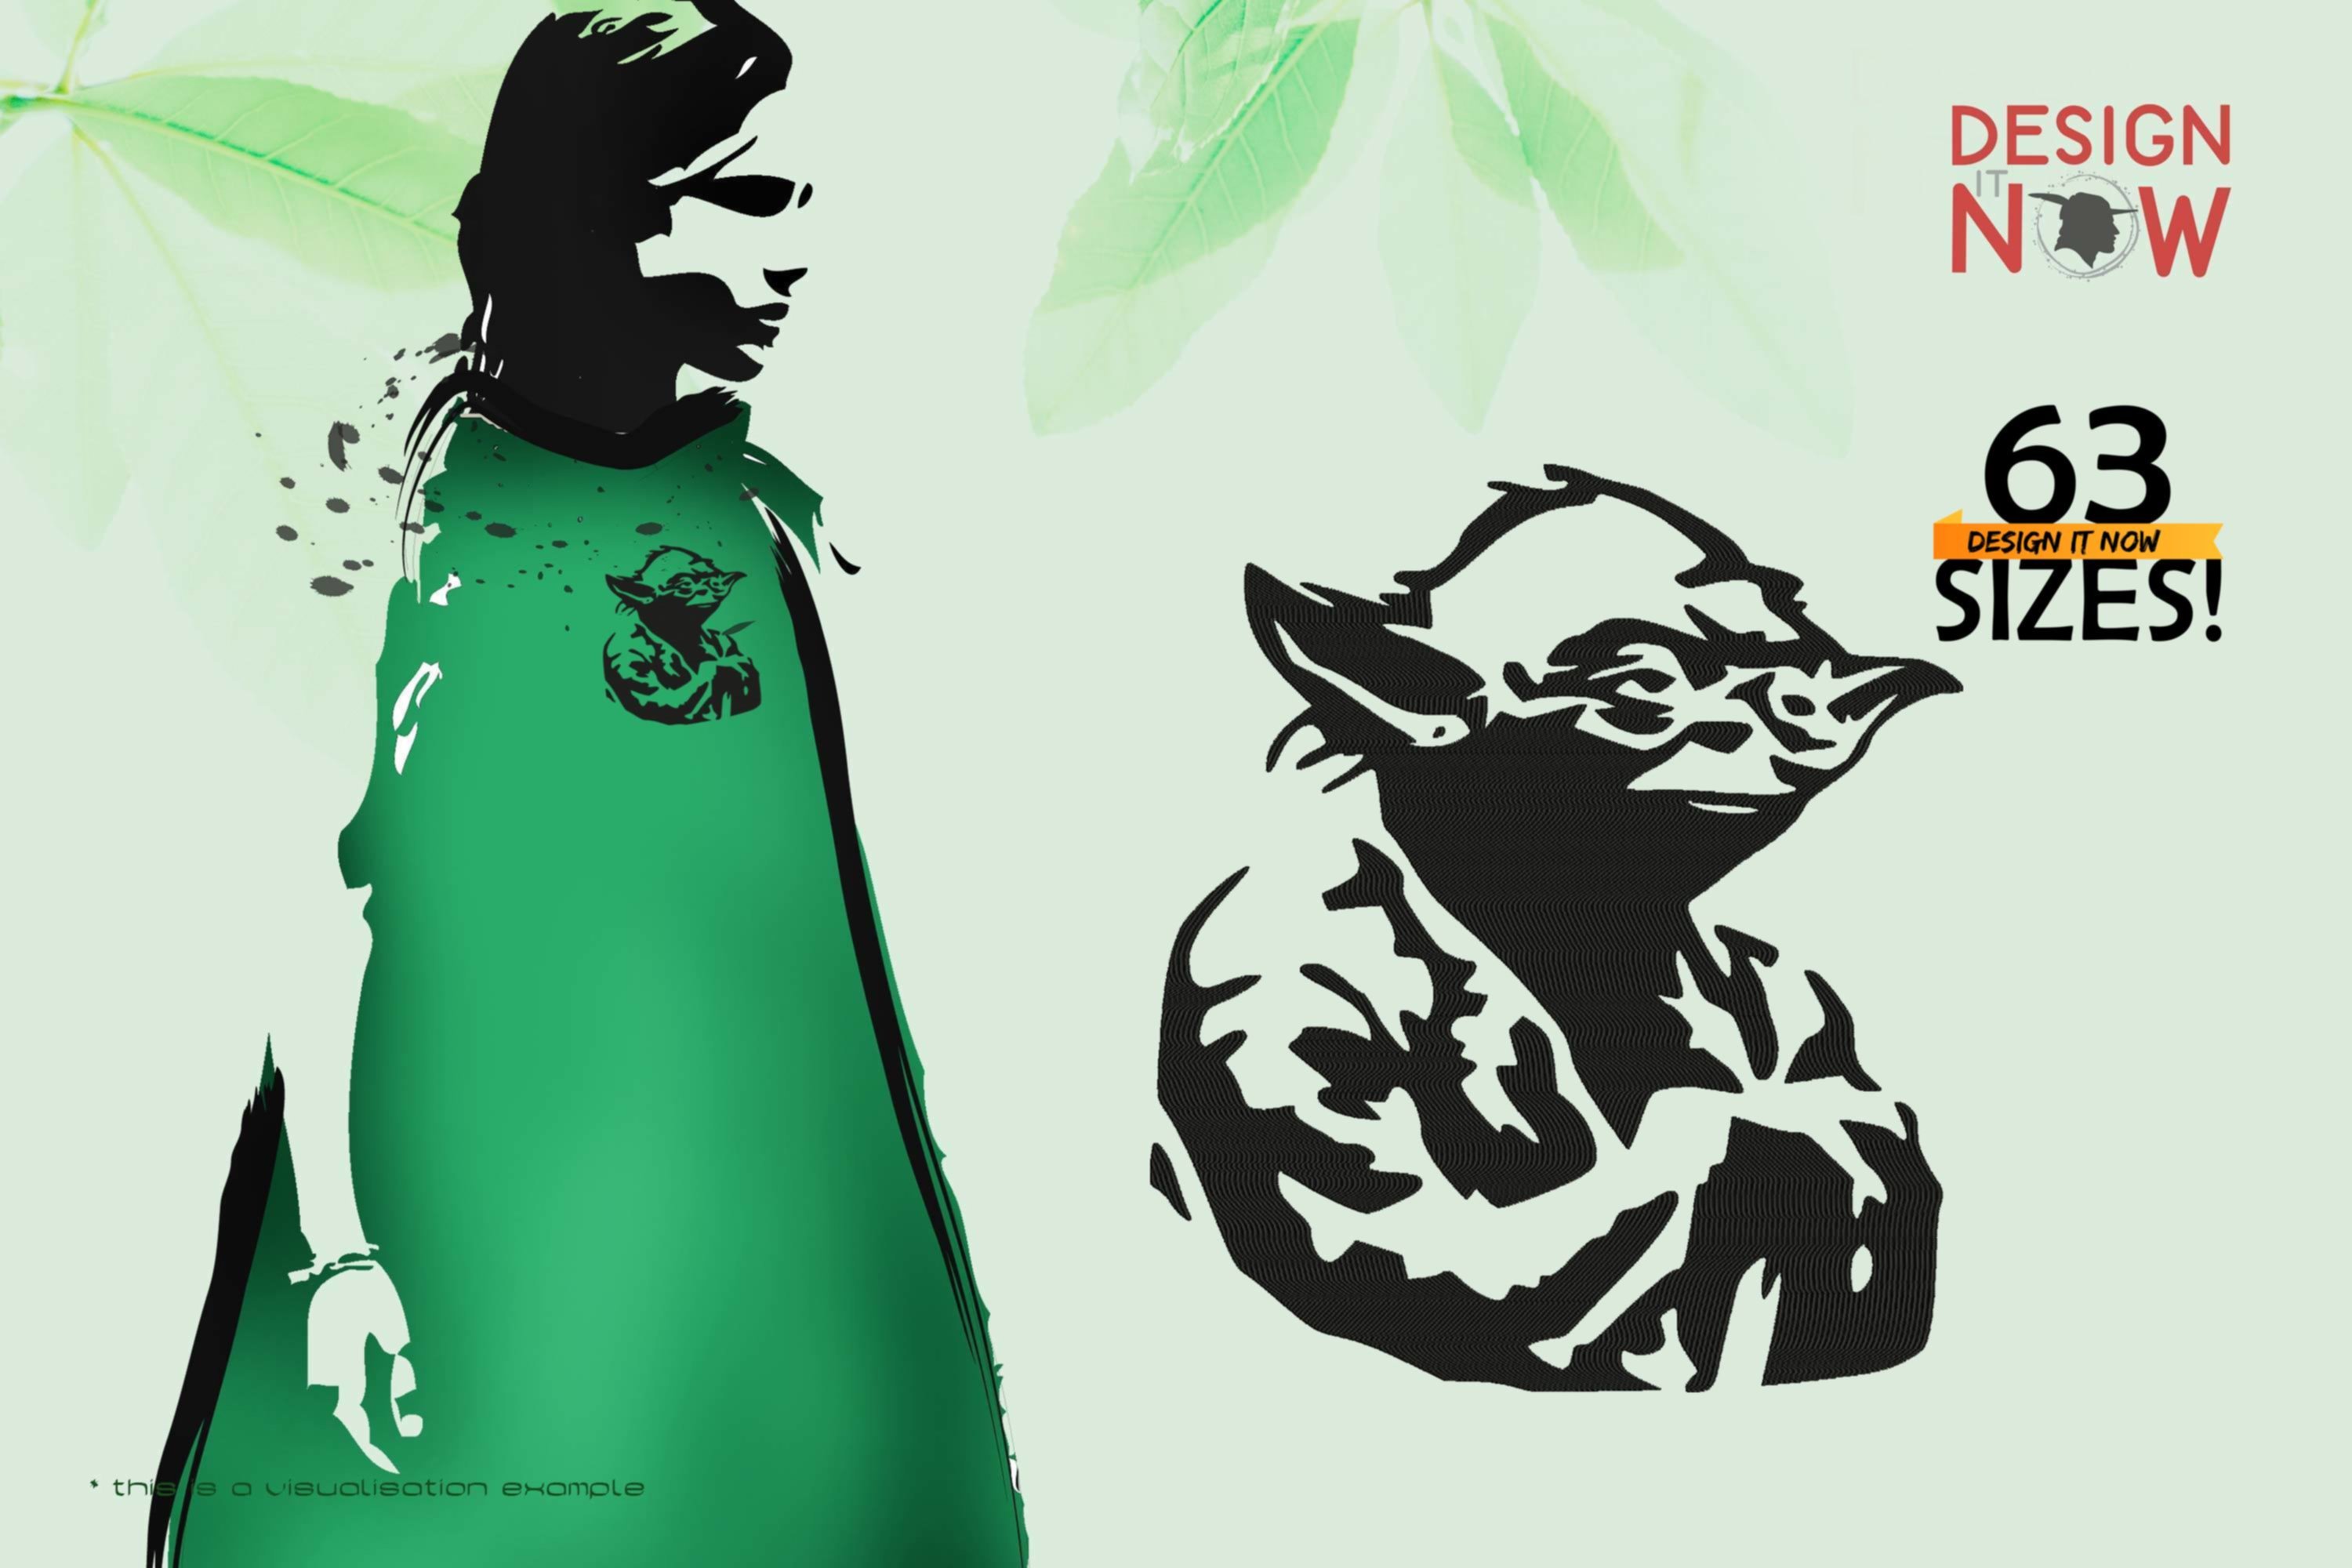  Tribute To Fictional Character Minch Yoda aka Yoda (Side View)